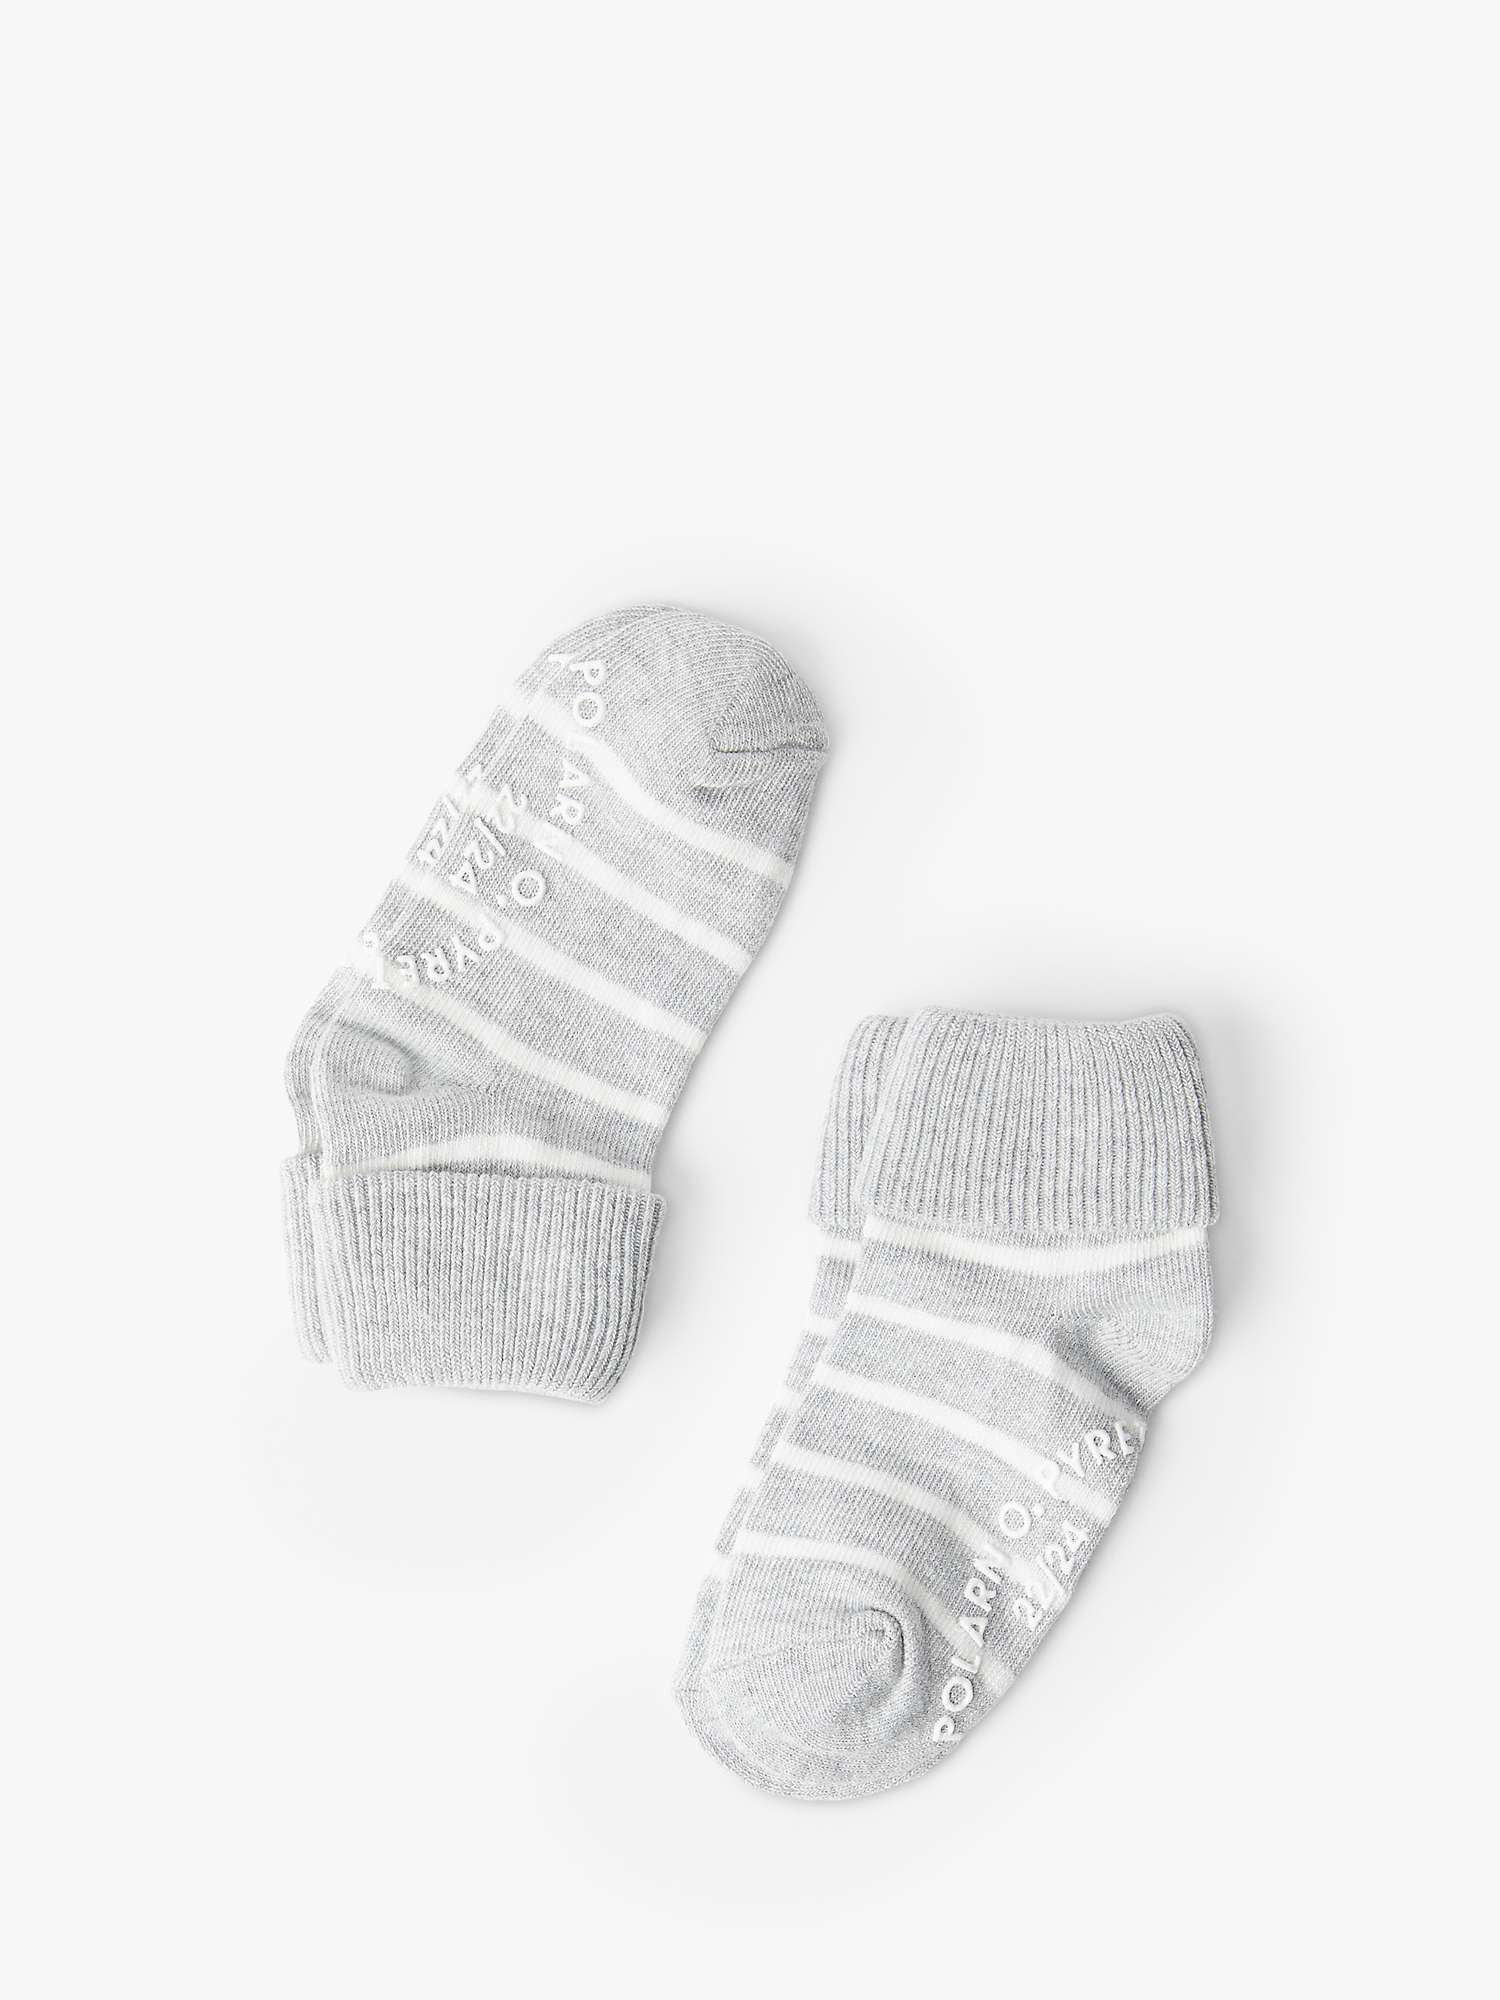 Buy Polarn O. Pyret Kids' Anti-Slip Stripe Socks, Pack of 2, Grey Online at johnlewis.com